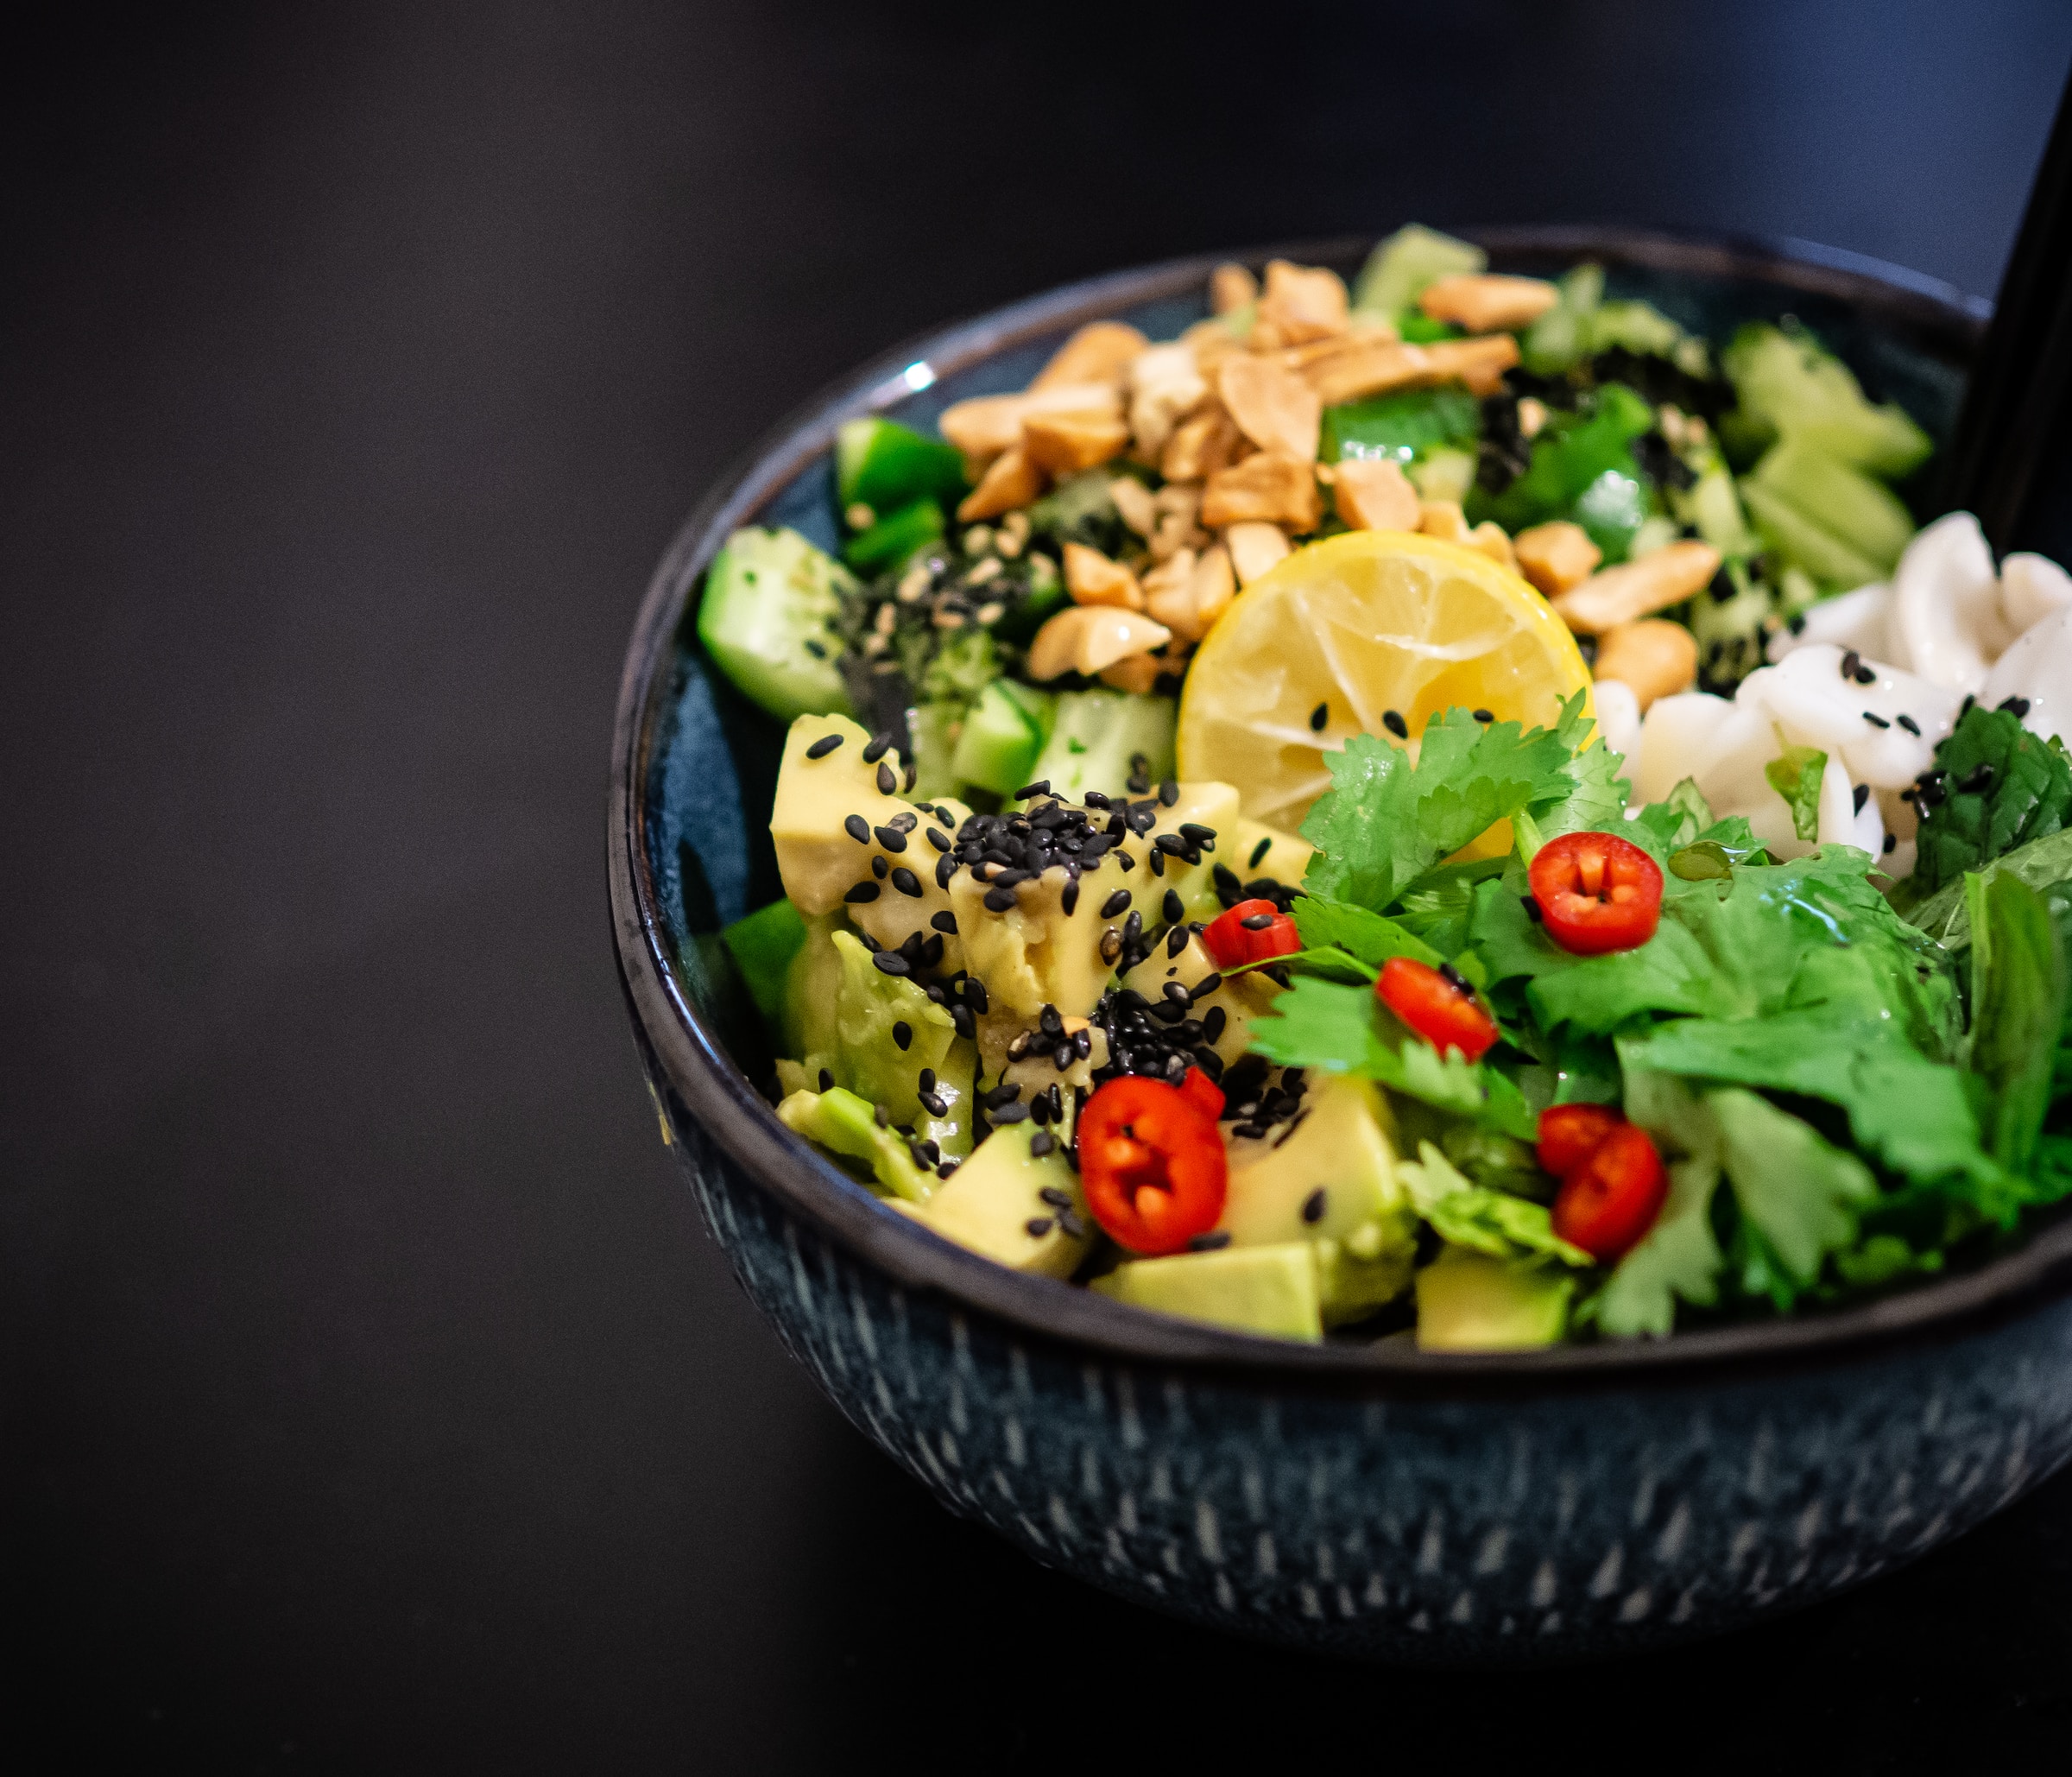 Salad in a bowl | Source: Unsplash